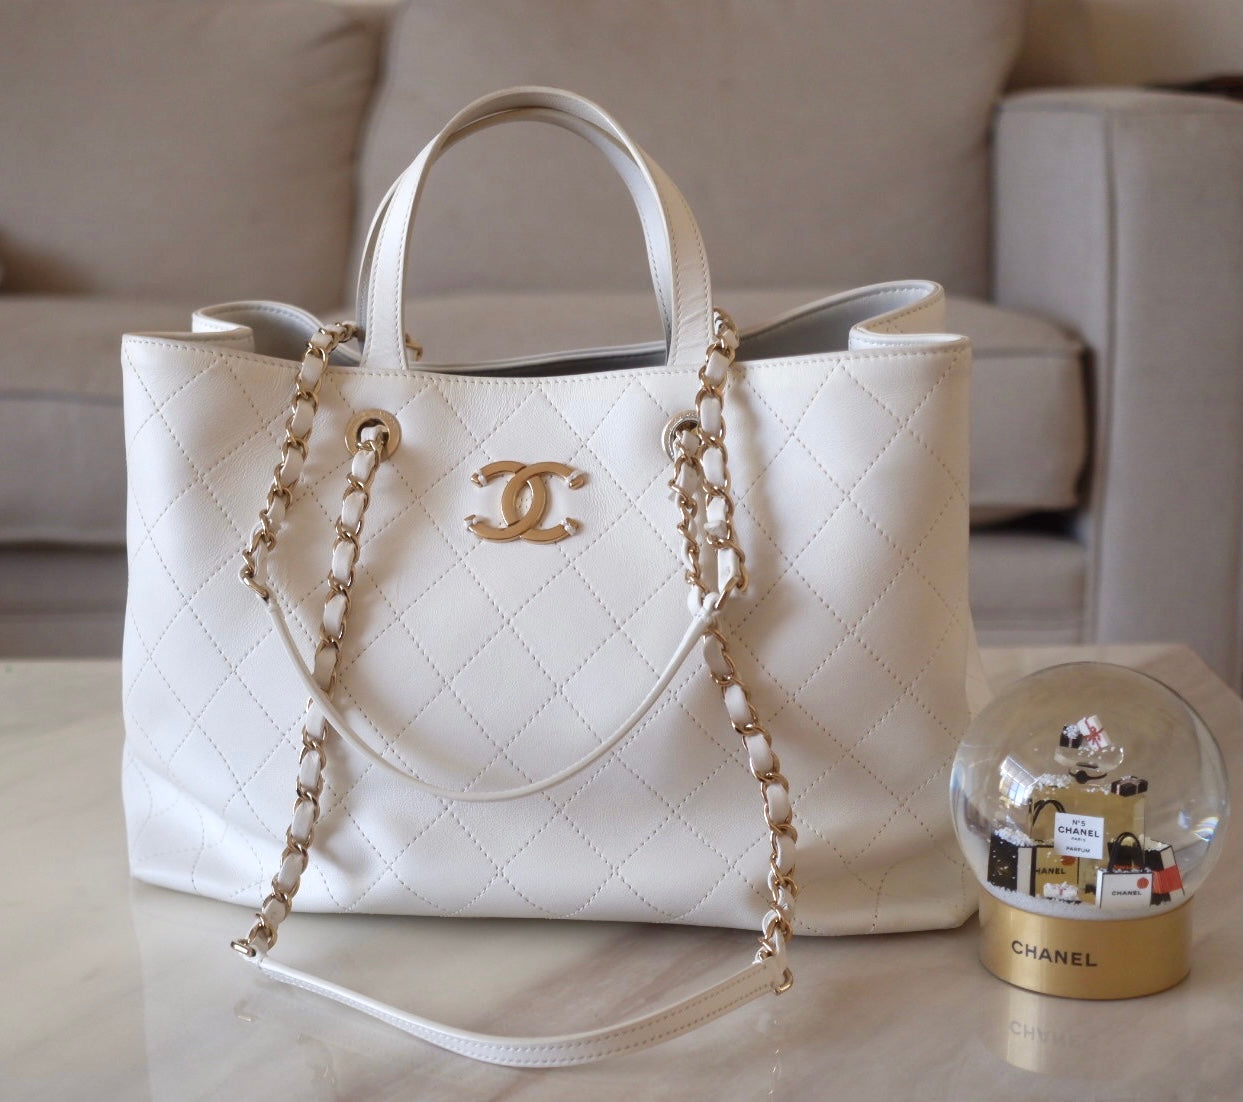 Chanel Bullskin Shopping Tote - Totes, Handbags